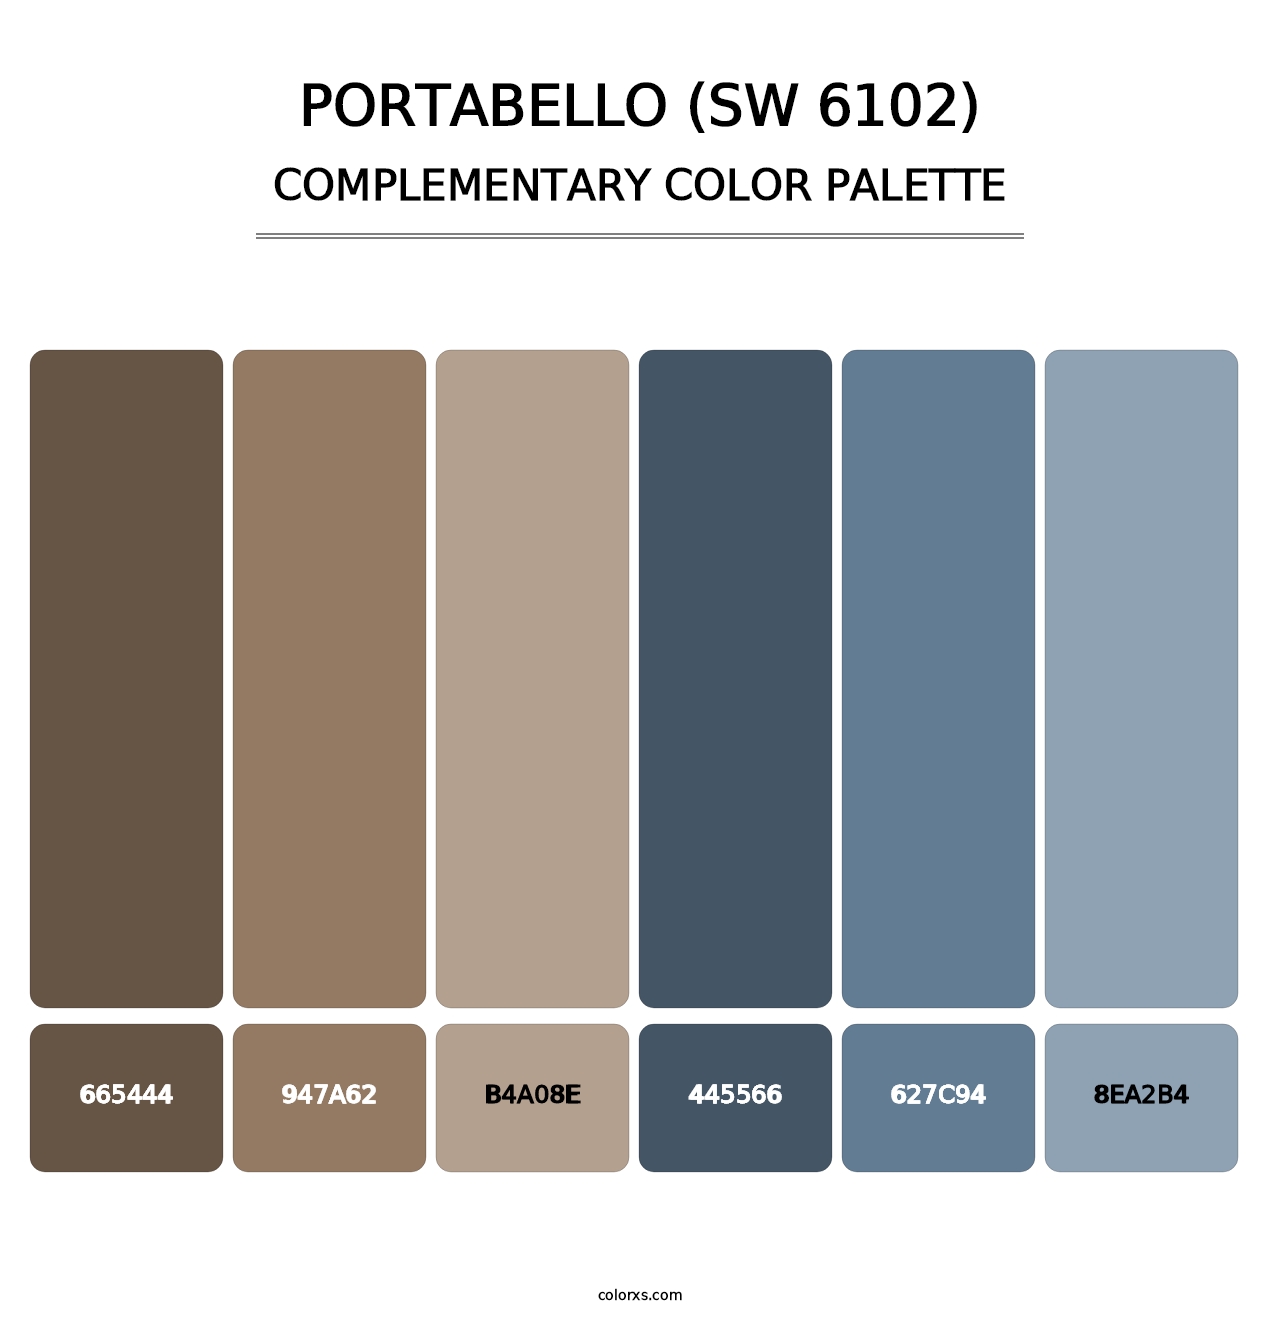 Portabello (SW 6102) - Complementary Color Palette